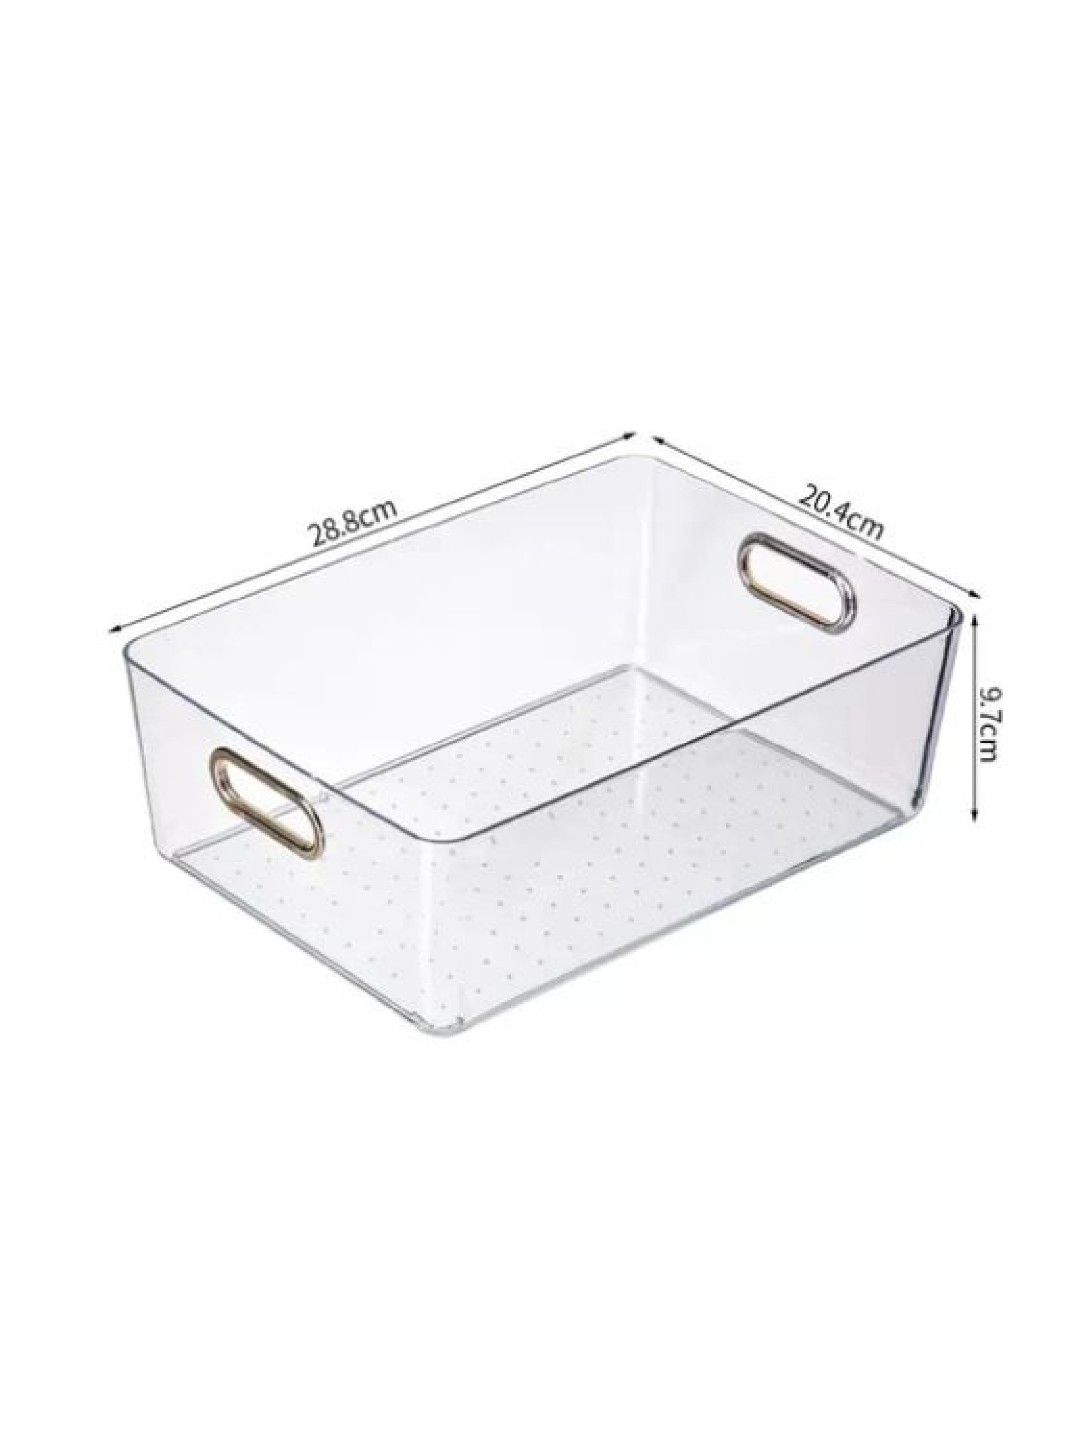 Mamei Acrylic Transparent Storage Organizer Box with Hold handles - Medium